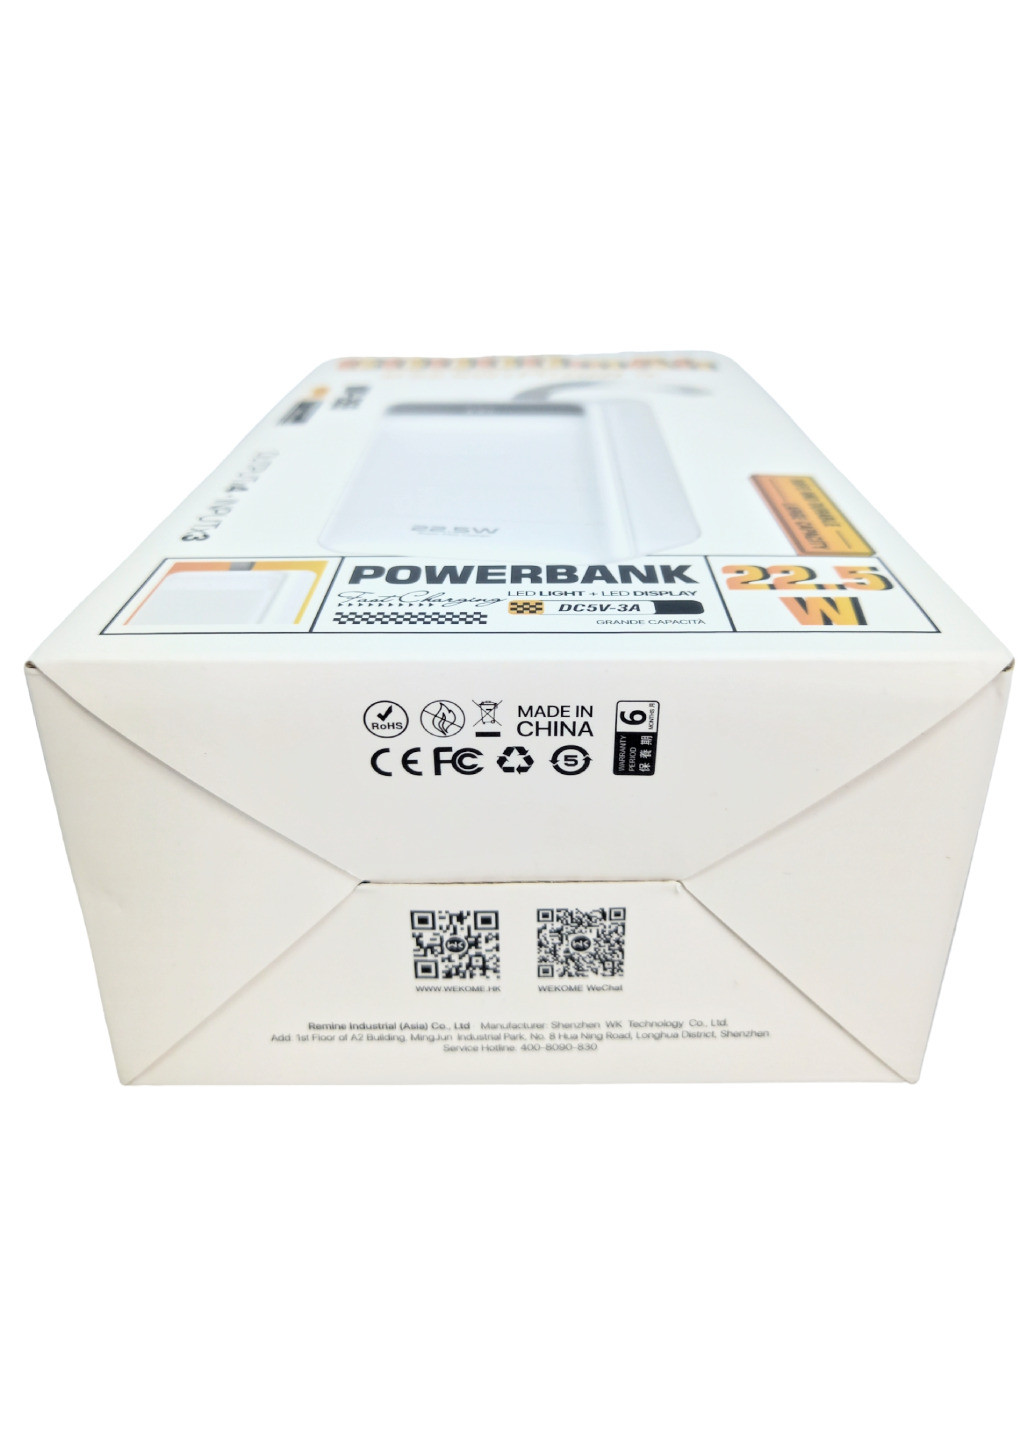 Power Bank 60000 mAh 22,5 W WEKOME Minre WP-269 реальная ёмкость быстрая зарядка внешний аккумулятор павербанк (павербанк) No Brand